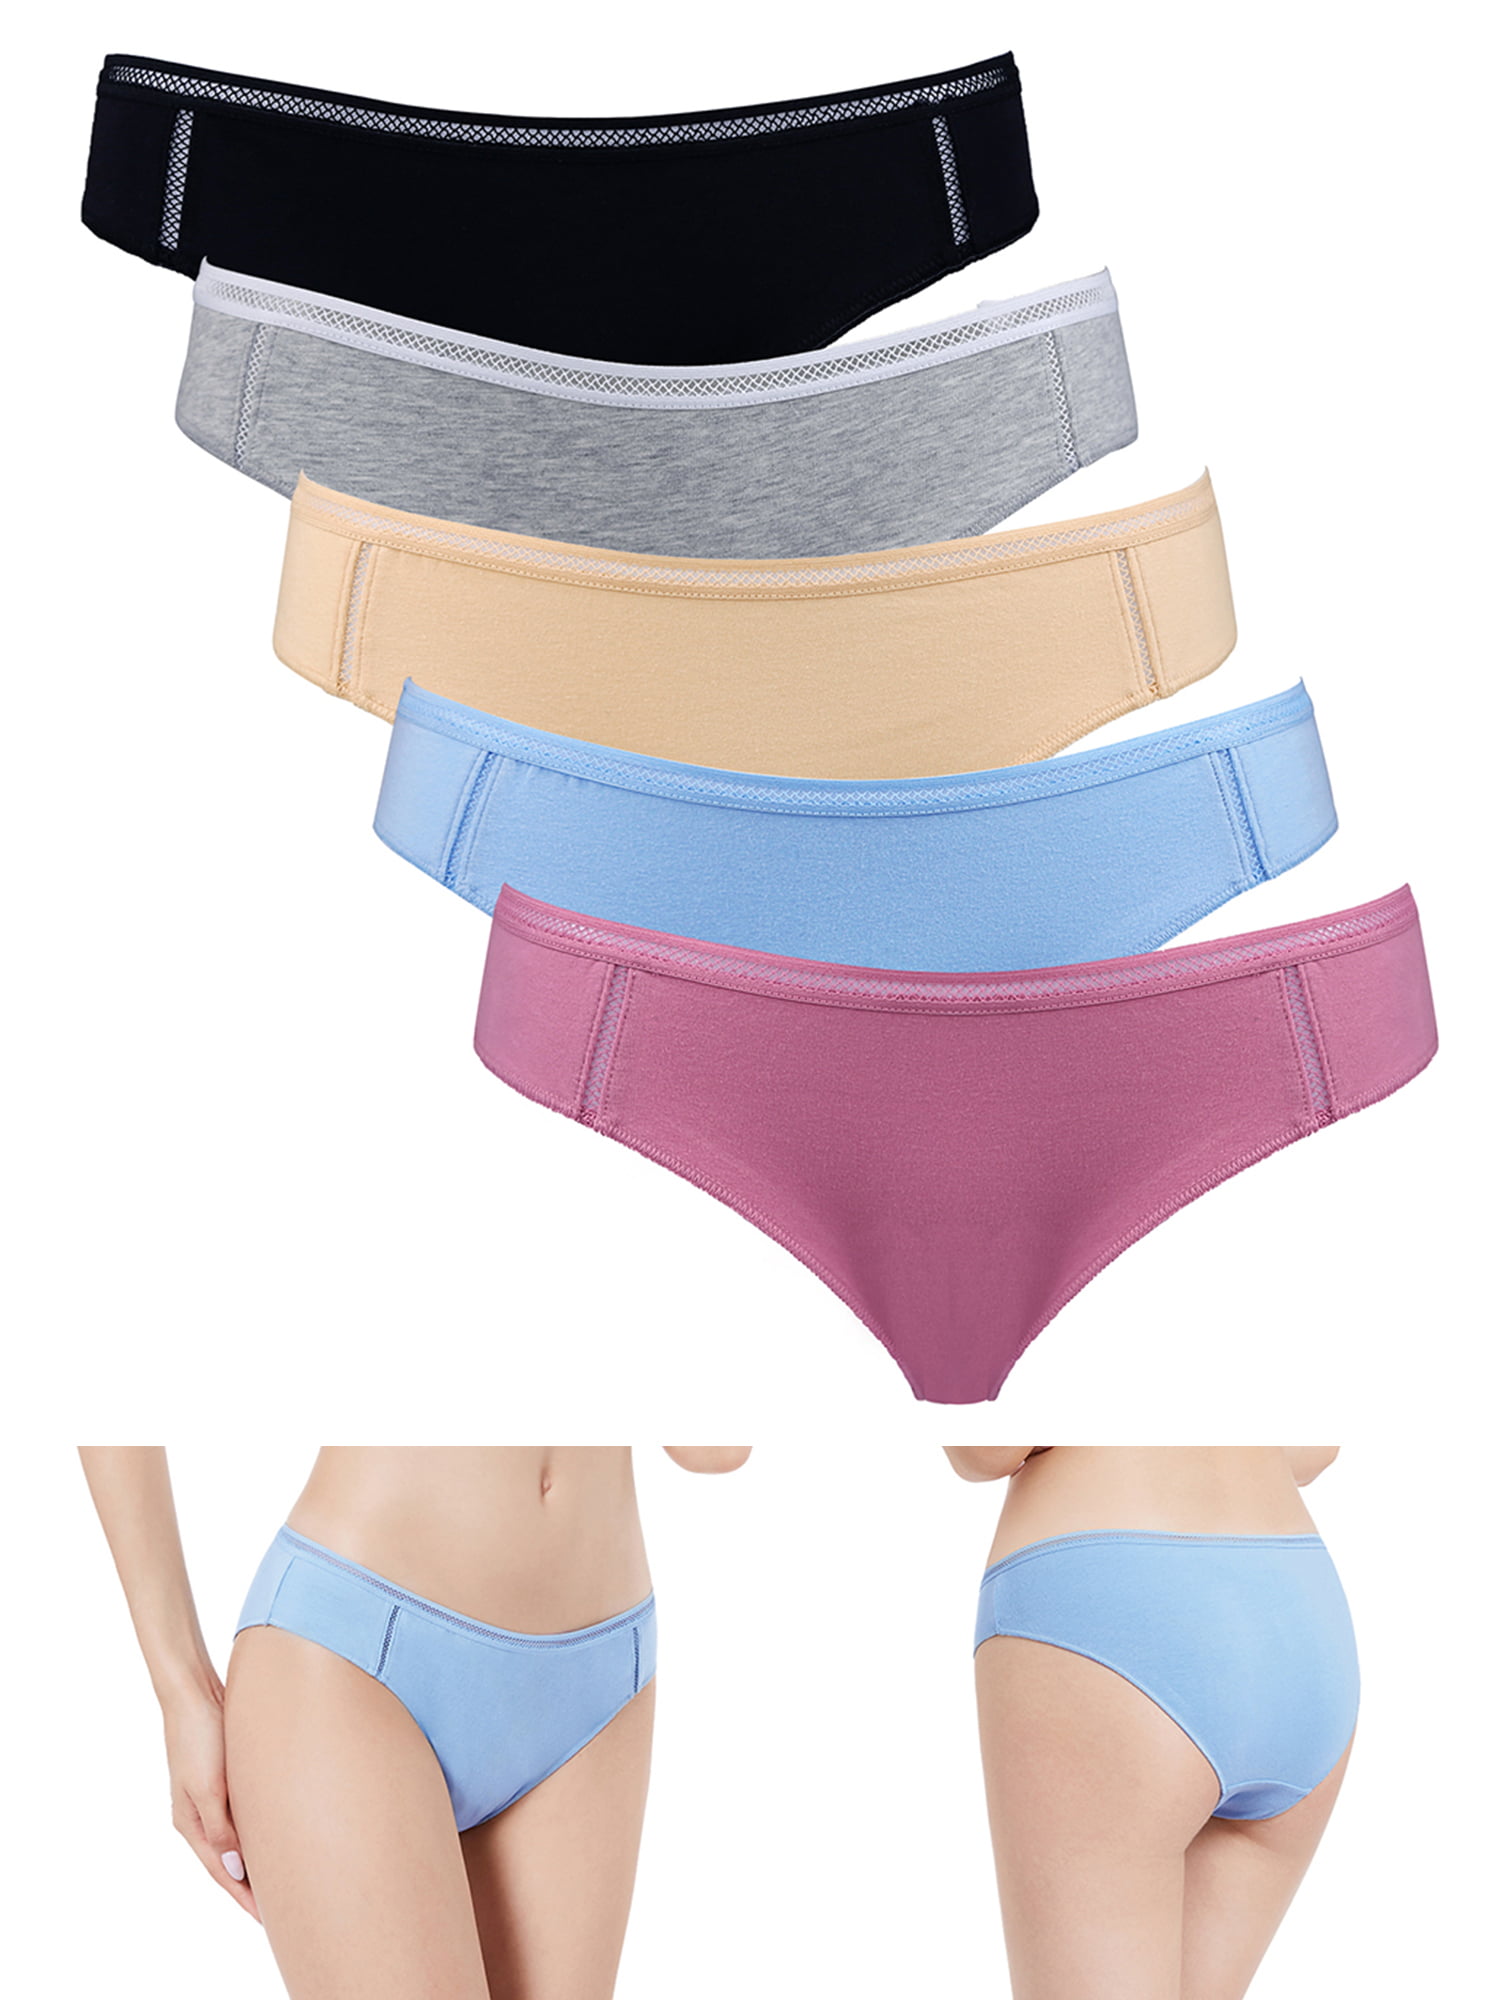 BeautyIn Women's Cotton Brief Underwear 5 Pack Comfort Hipster Panties 